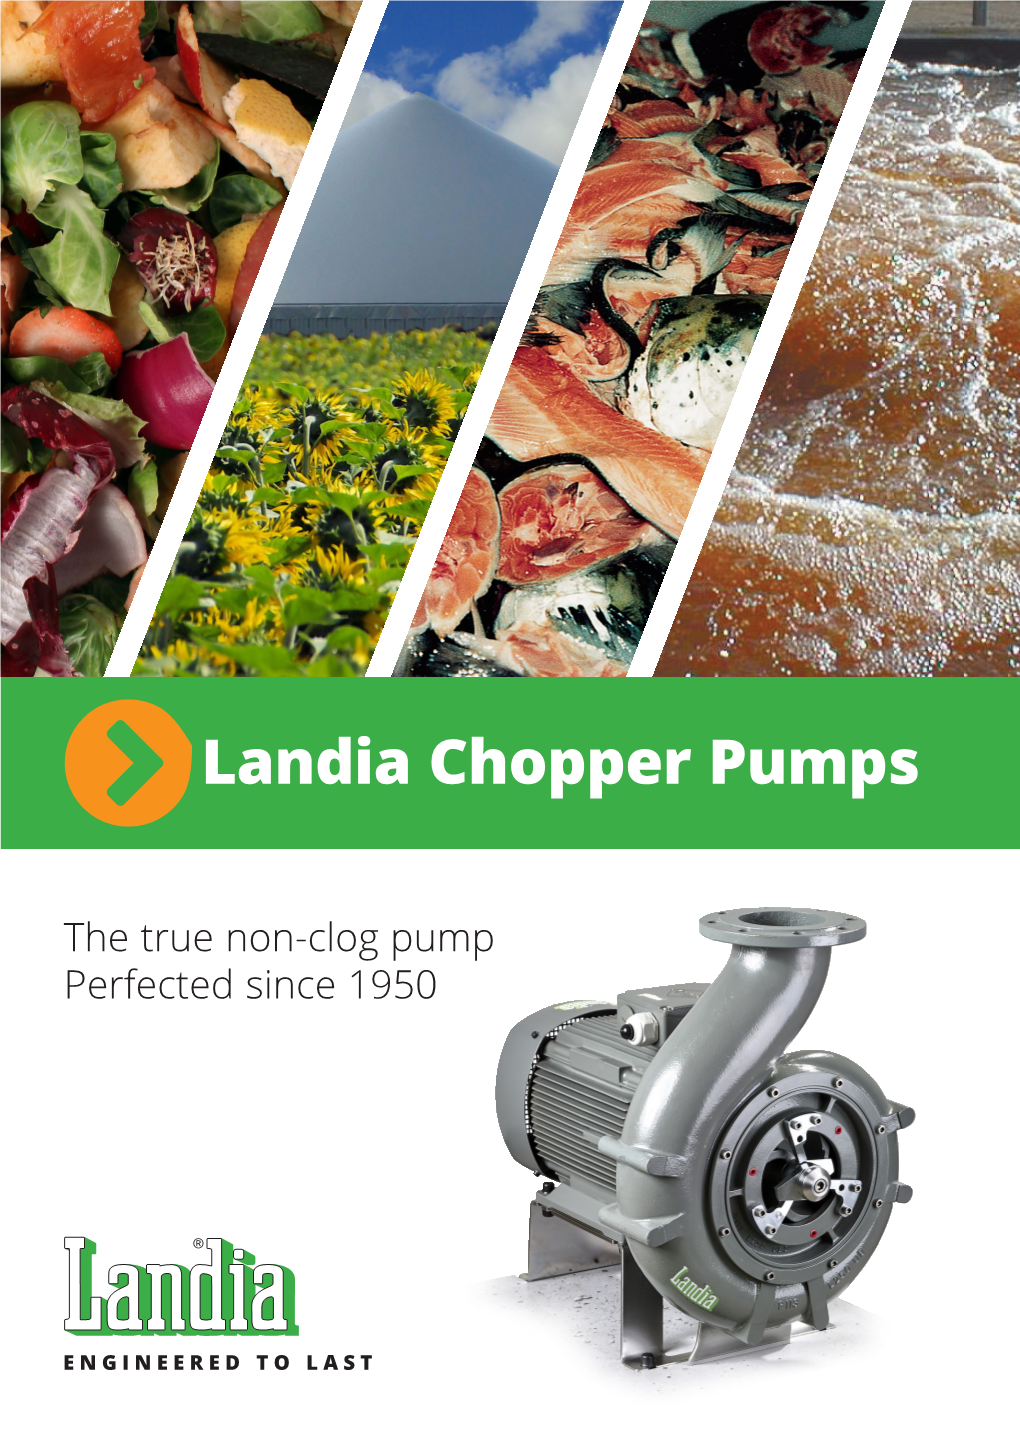 Landia Chopper Pumps